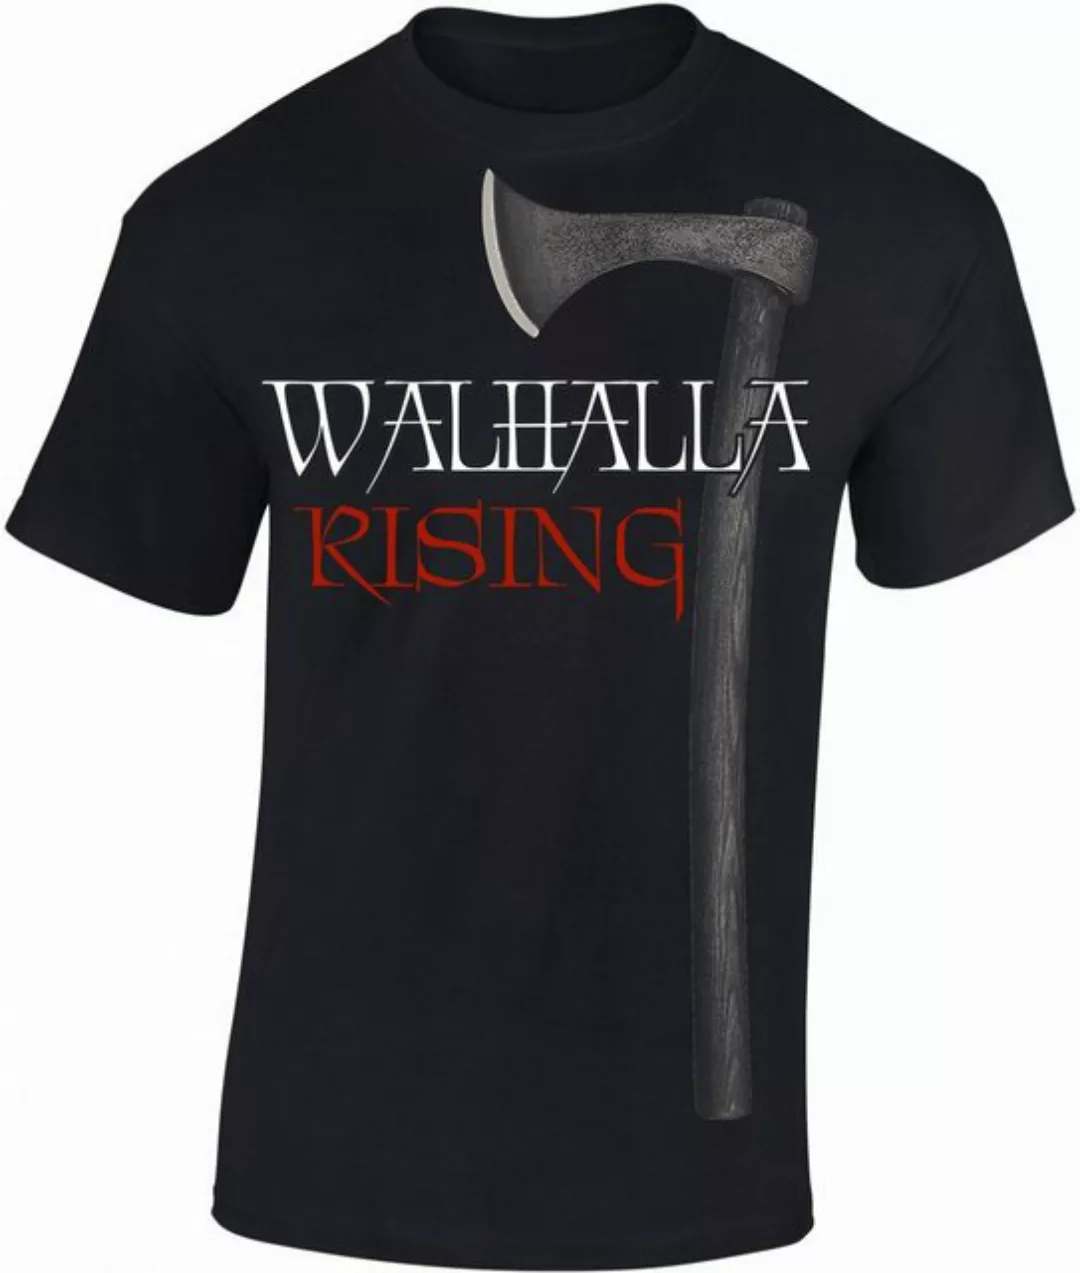 Baddery Print-Shirt Wikinger Tshirt, Walhalla Rising, Viking Shirt Männer, günstig online kaufen